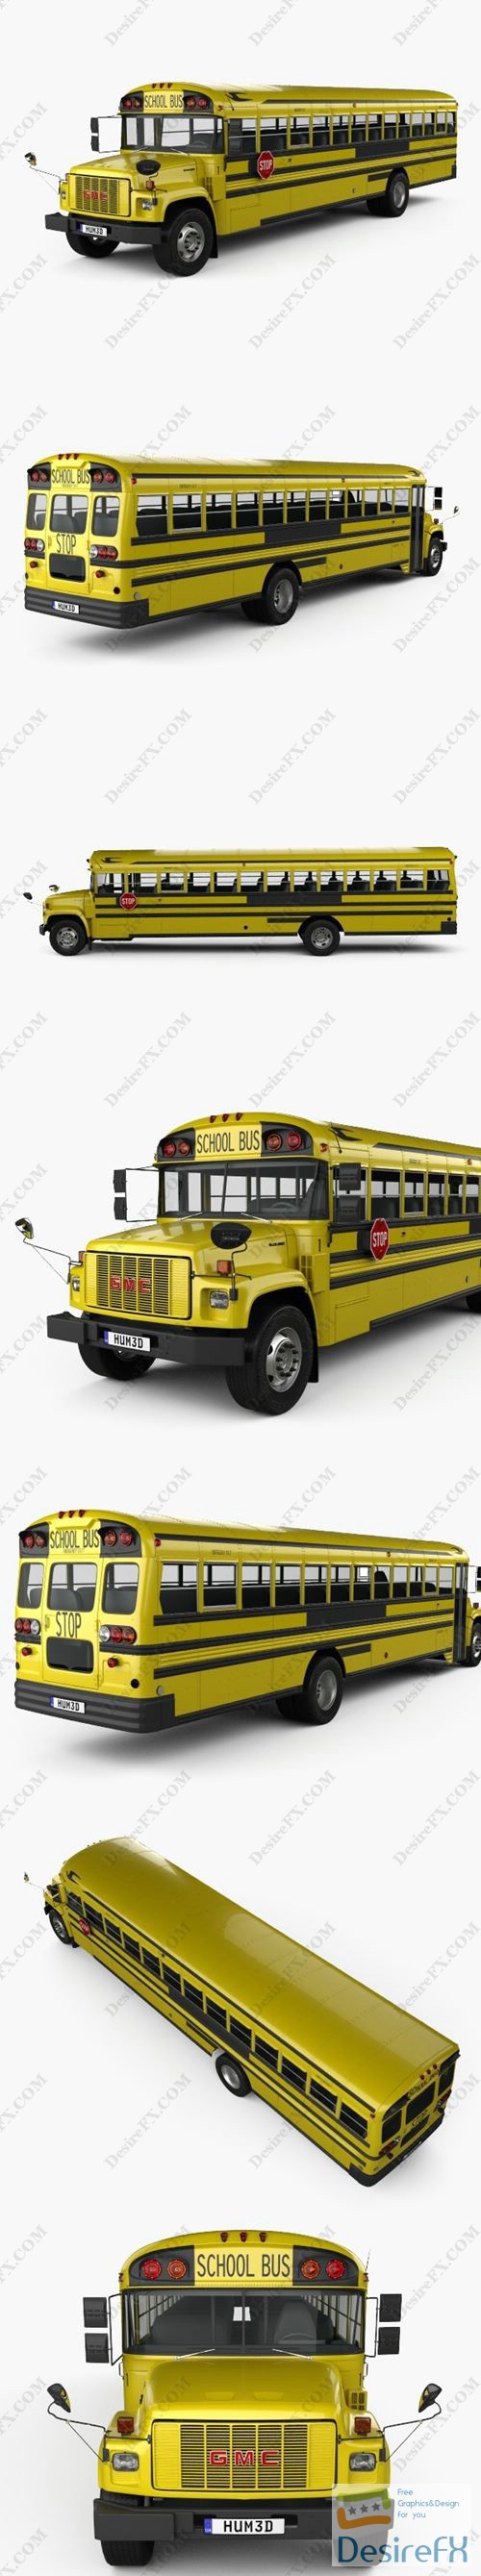 GMC B-Series School Bus 2000 3D Model